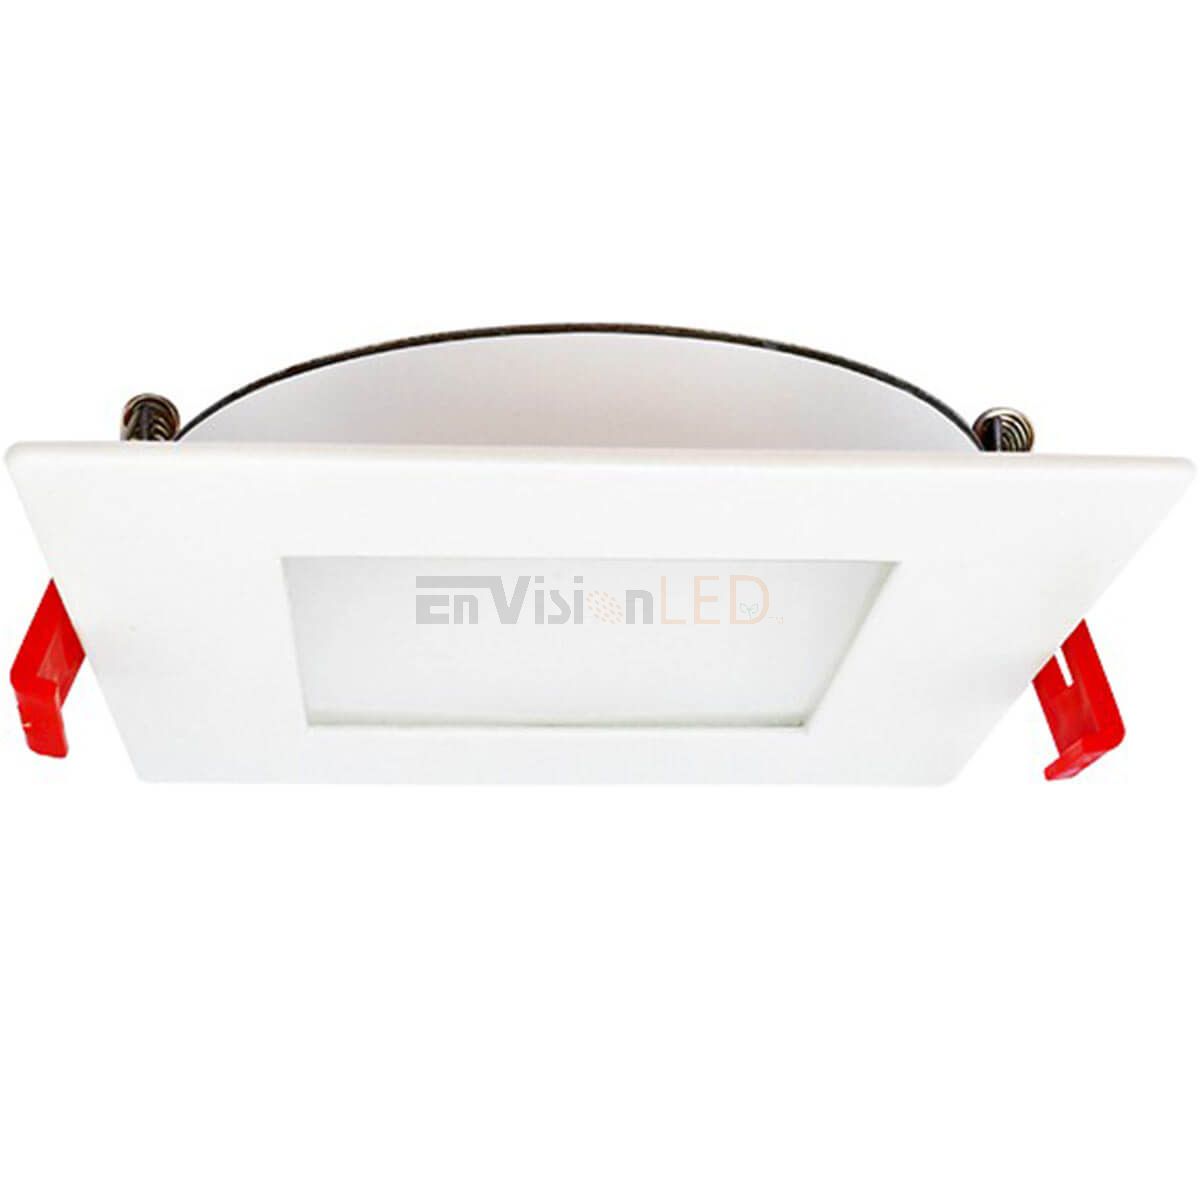 Envision 6" LED J-Box Square Panel Downlight 5CCT- White, Black, Brushed Nickel - Sonic Electric